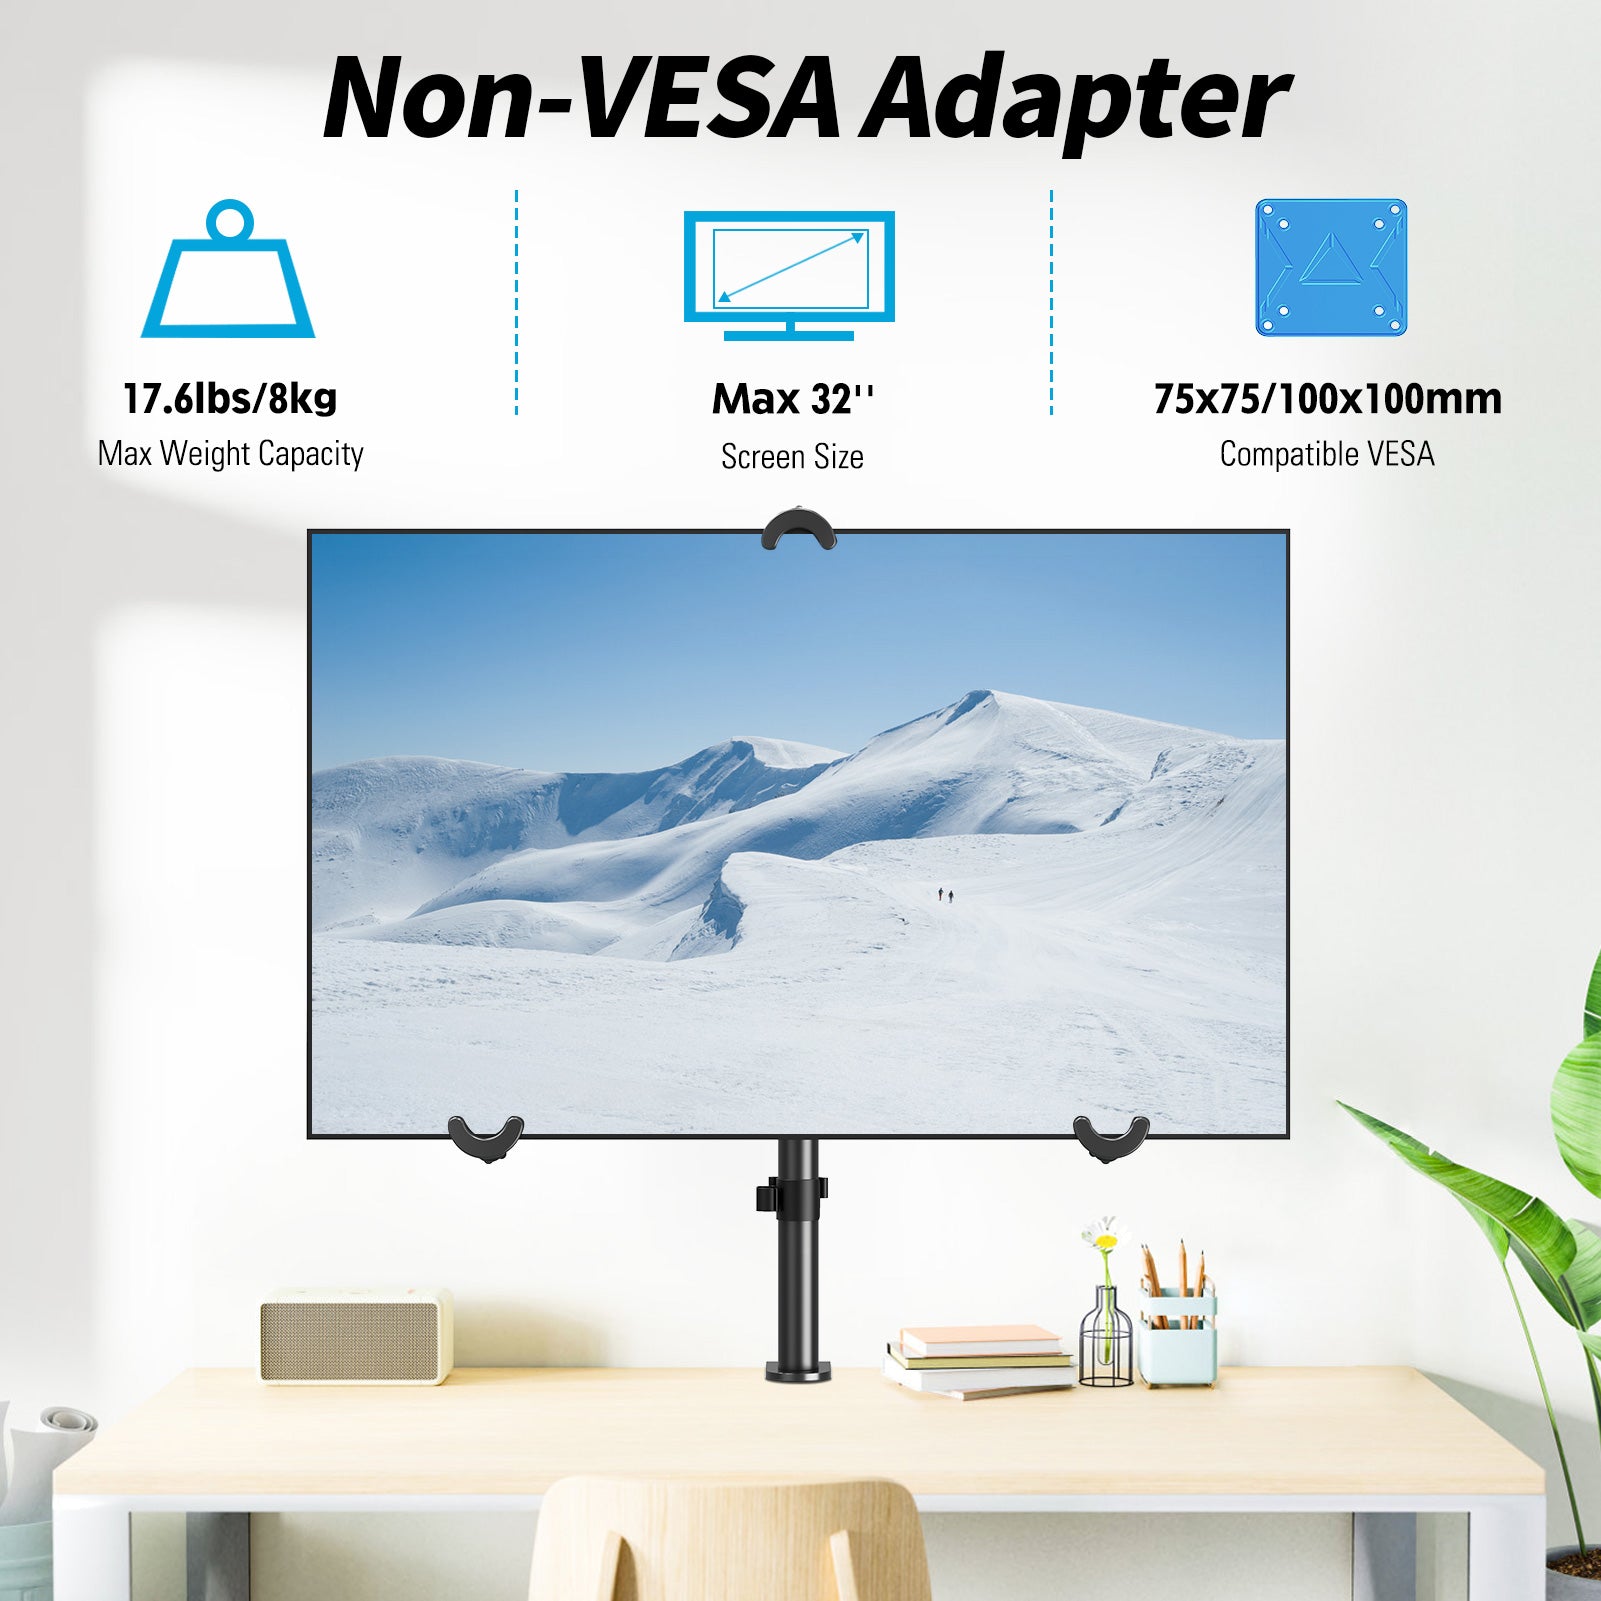 MOUNTUP Universal VESA Mount Adapter Kit, Non-VESA Monitor Mounting Adapter for 19 to 32 inch Computer Screens,VESA Bracket 75x75mm/100x100mm